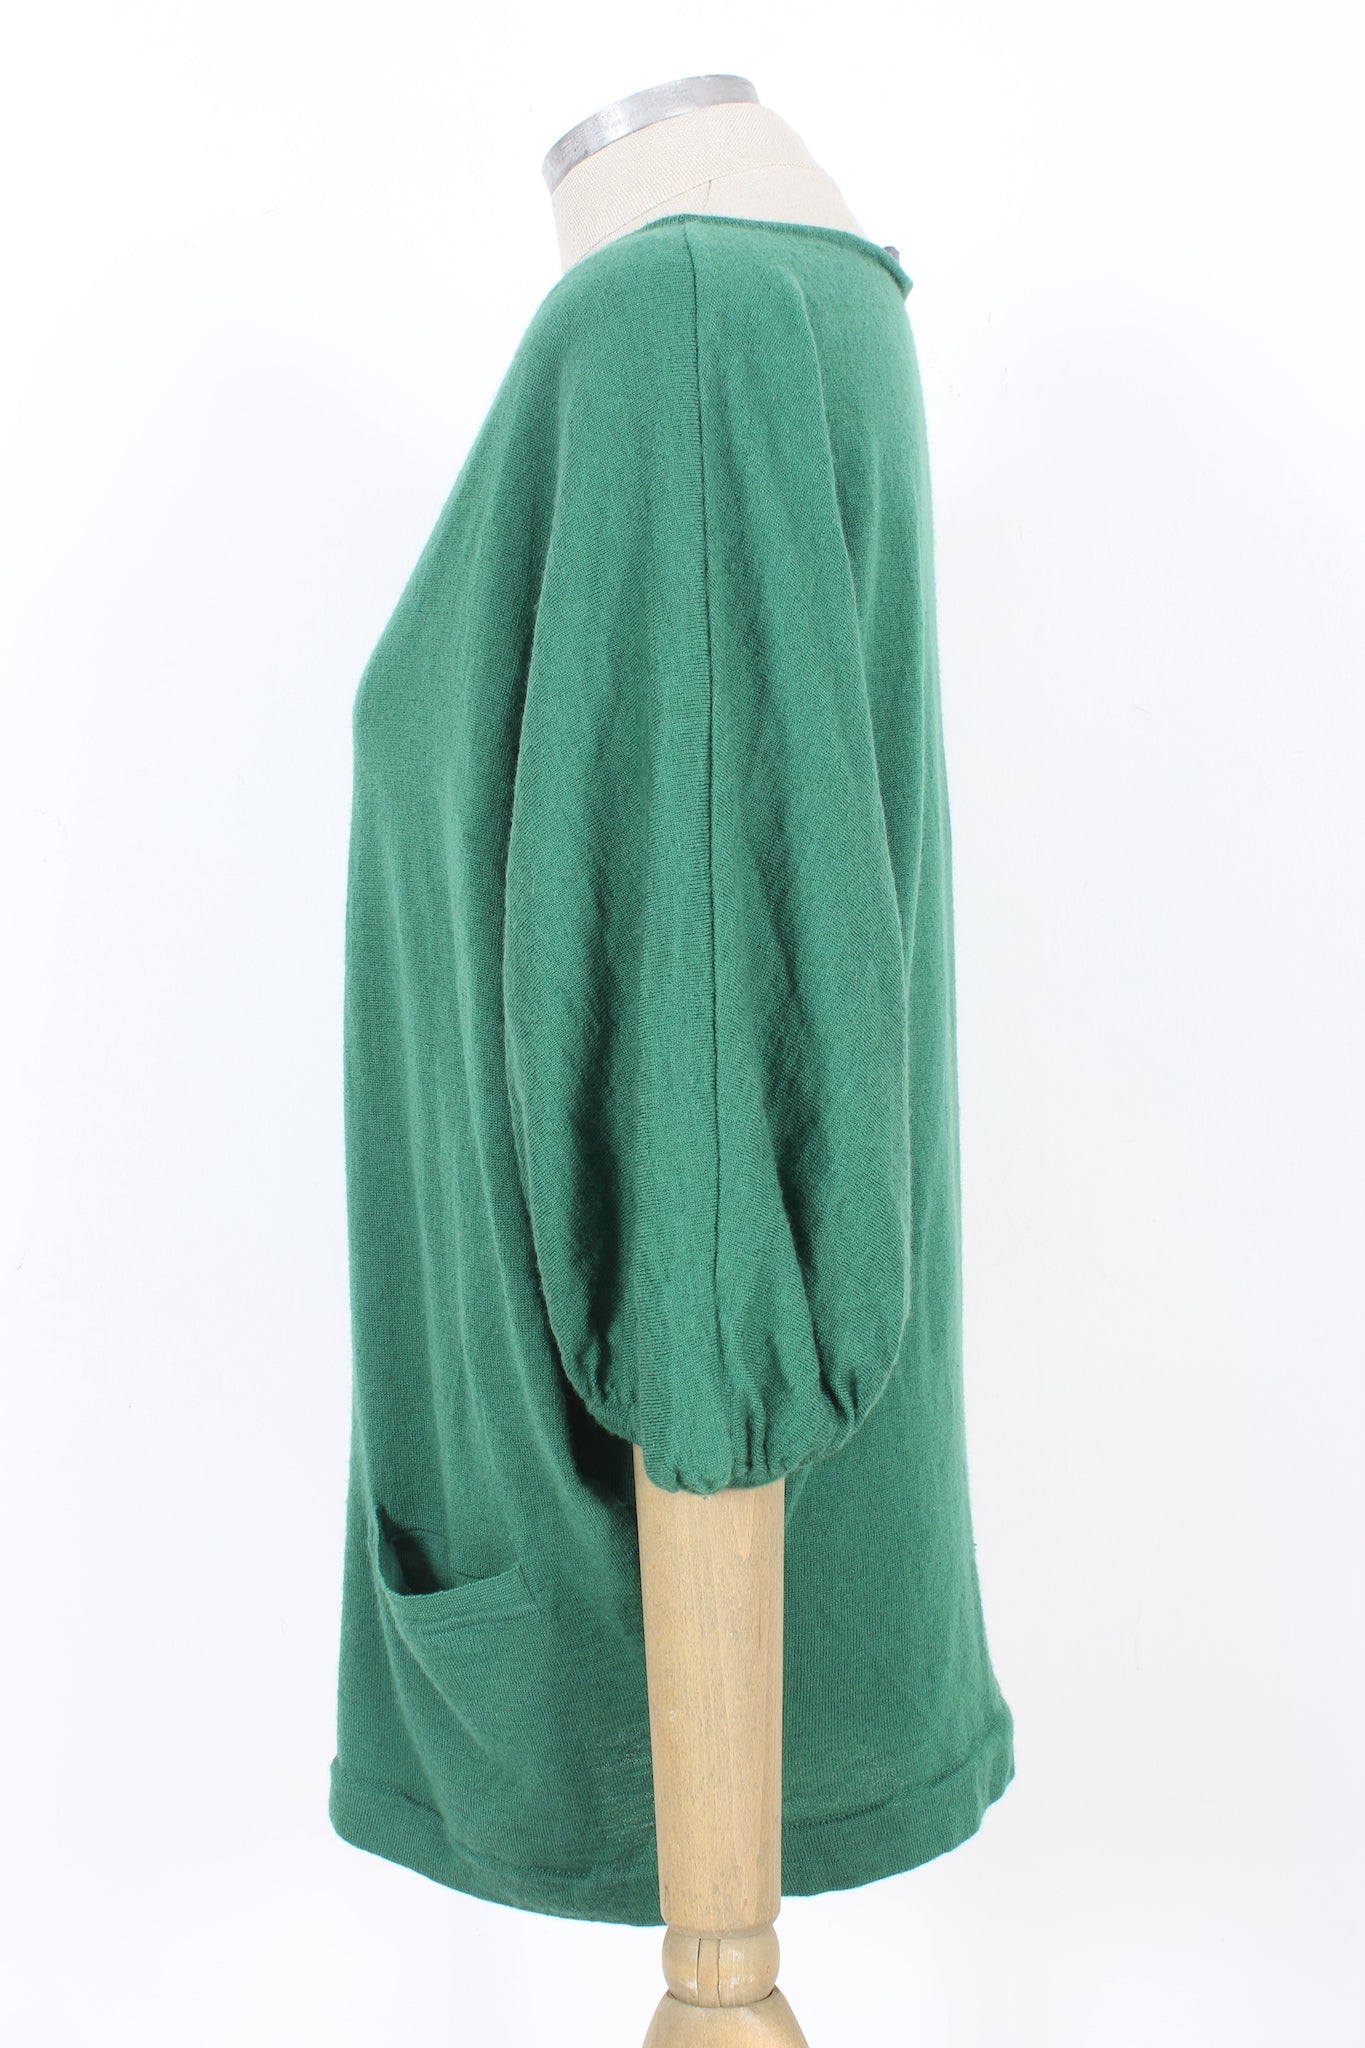 Alberta Ferretti Wool Green Casual Sweater 2000s